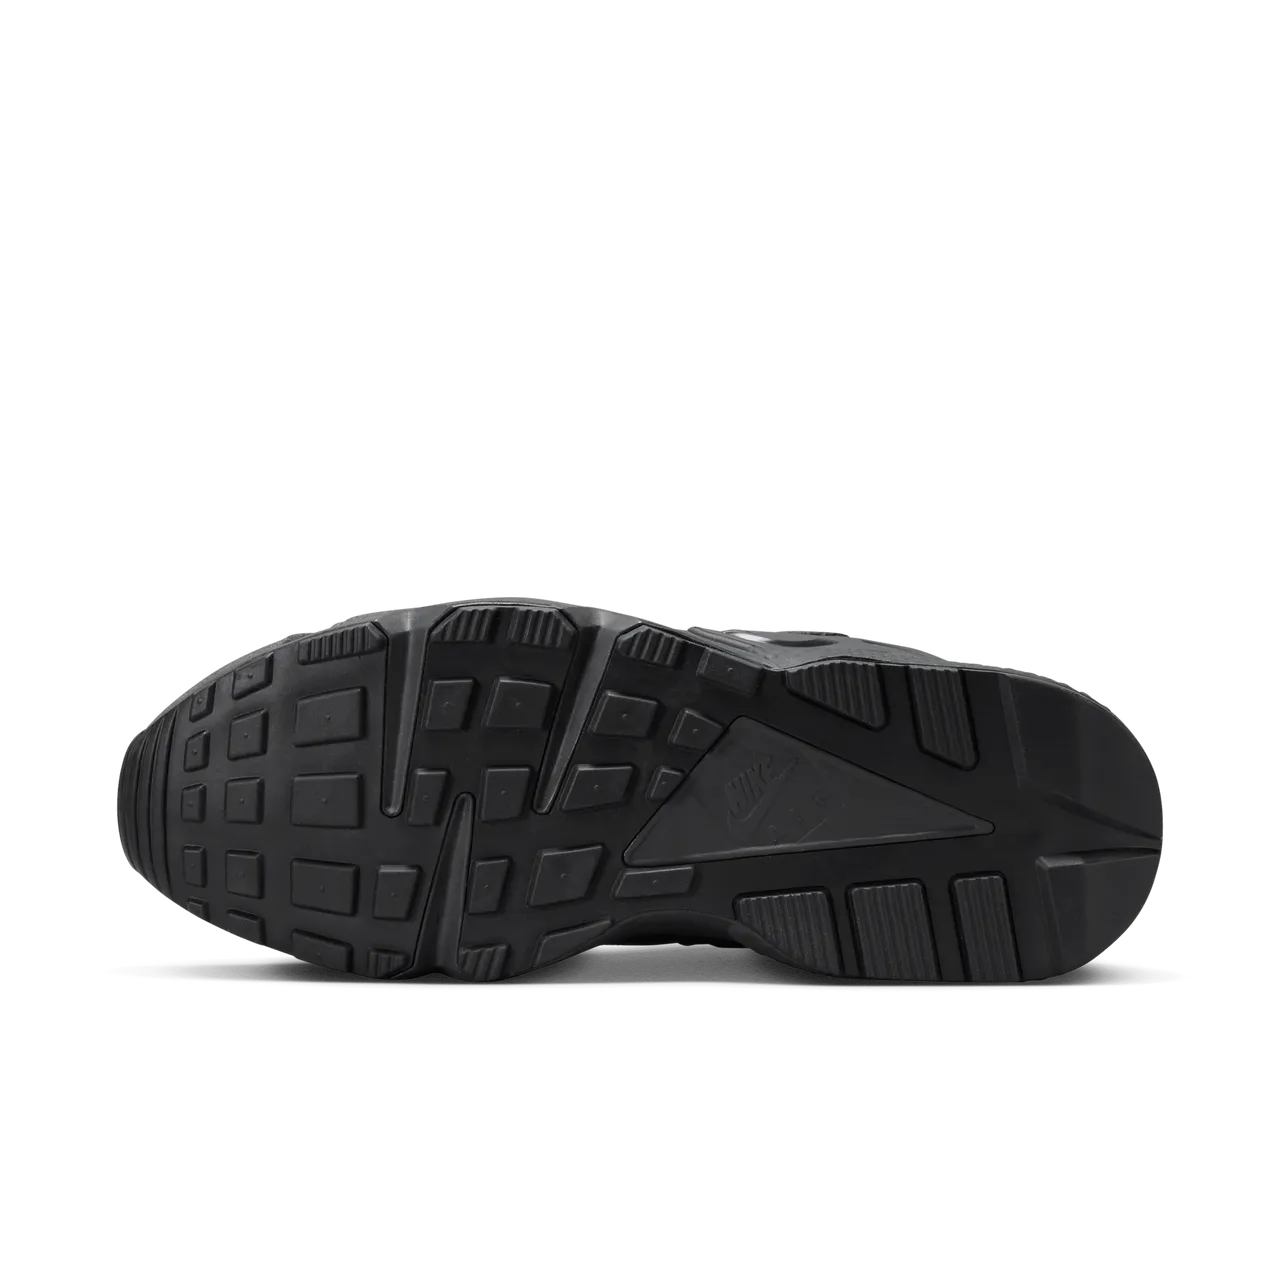 Nike Air Huarache Runner Men's Shoes - Black